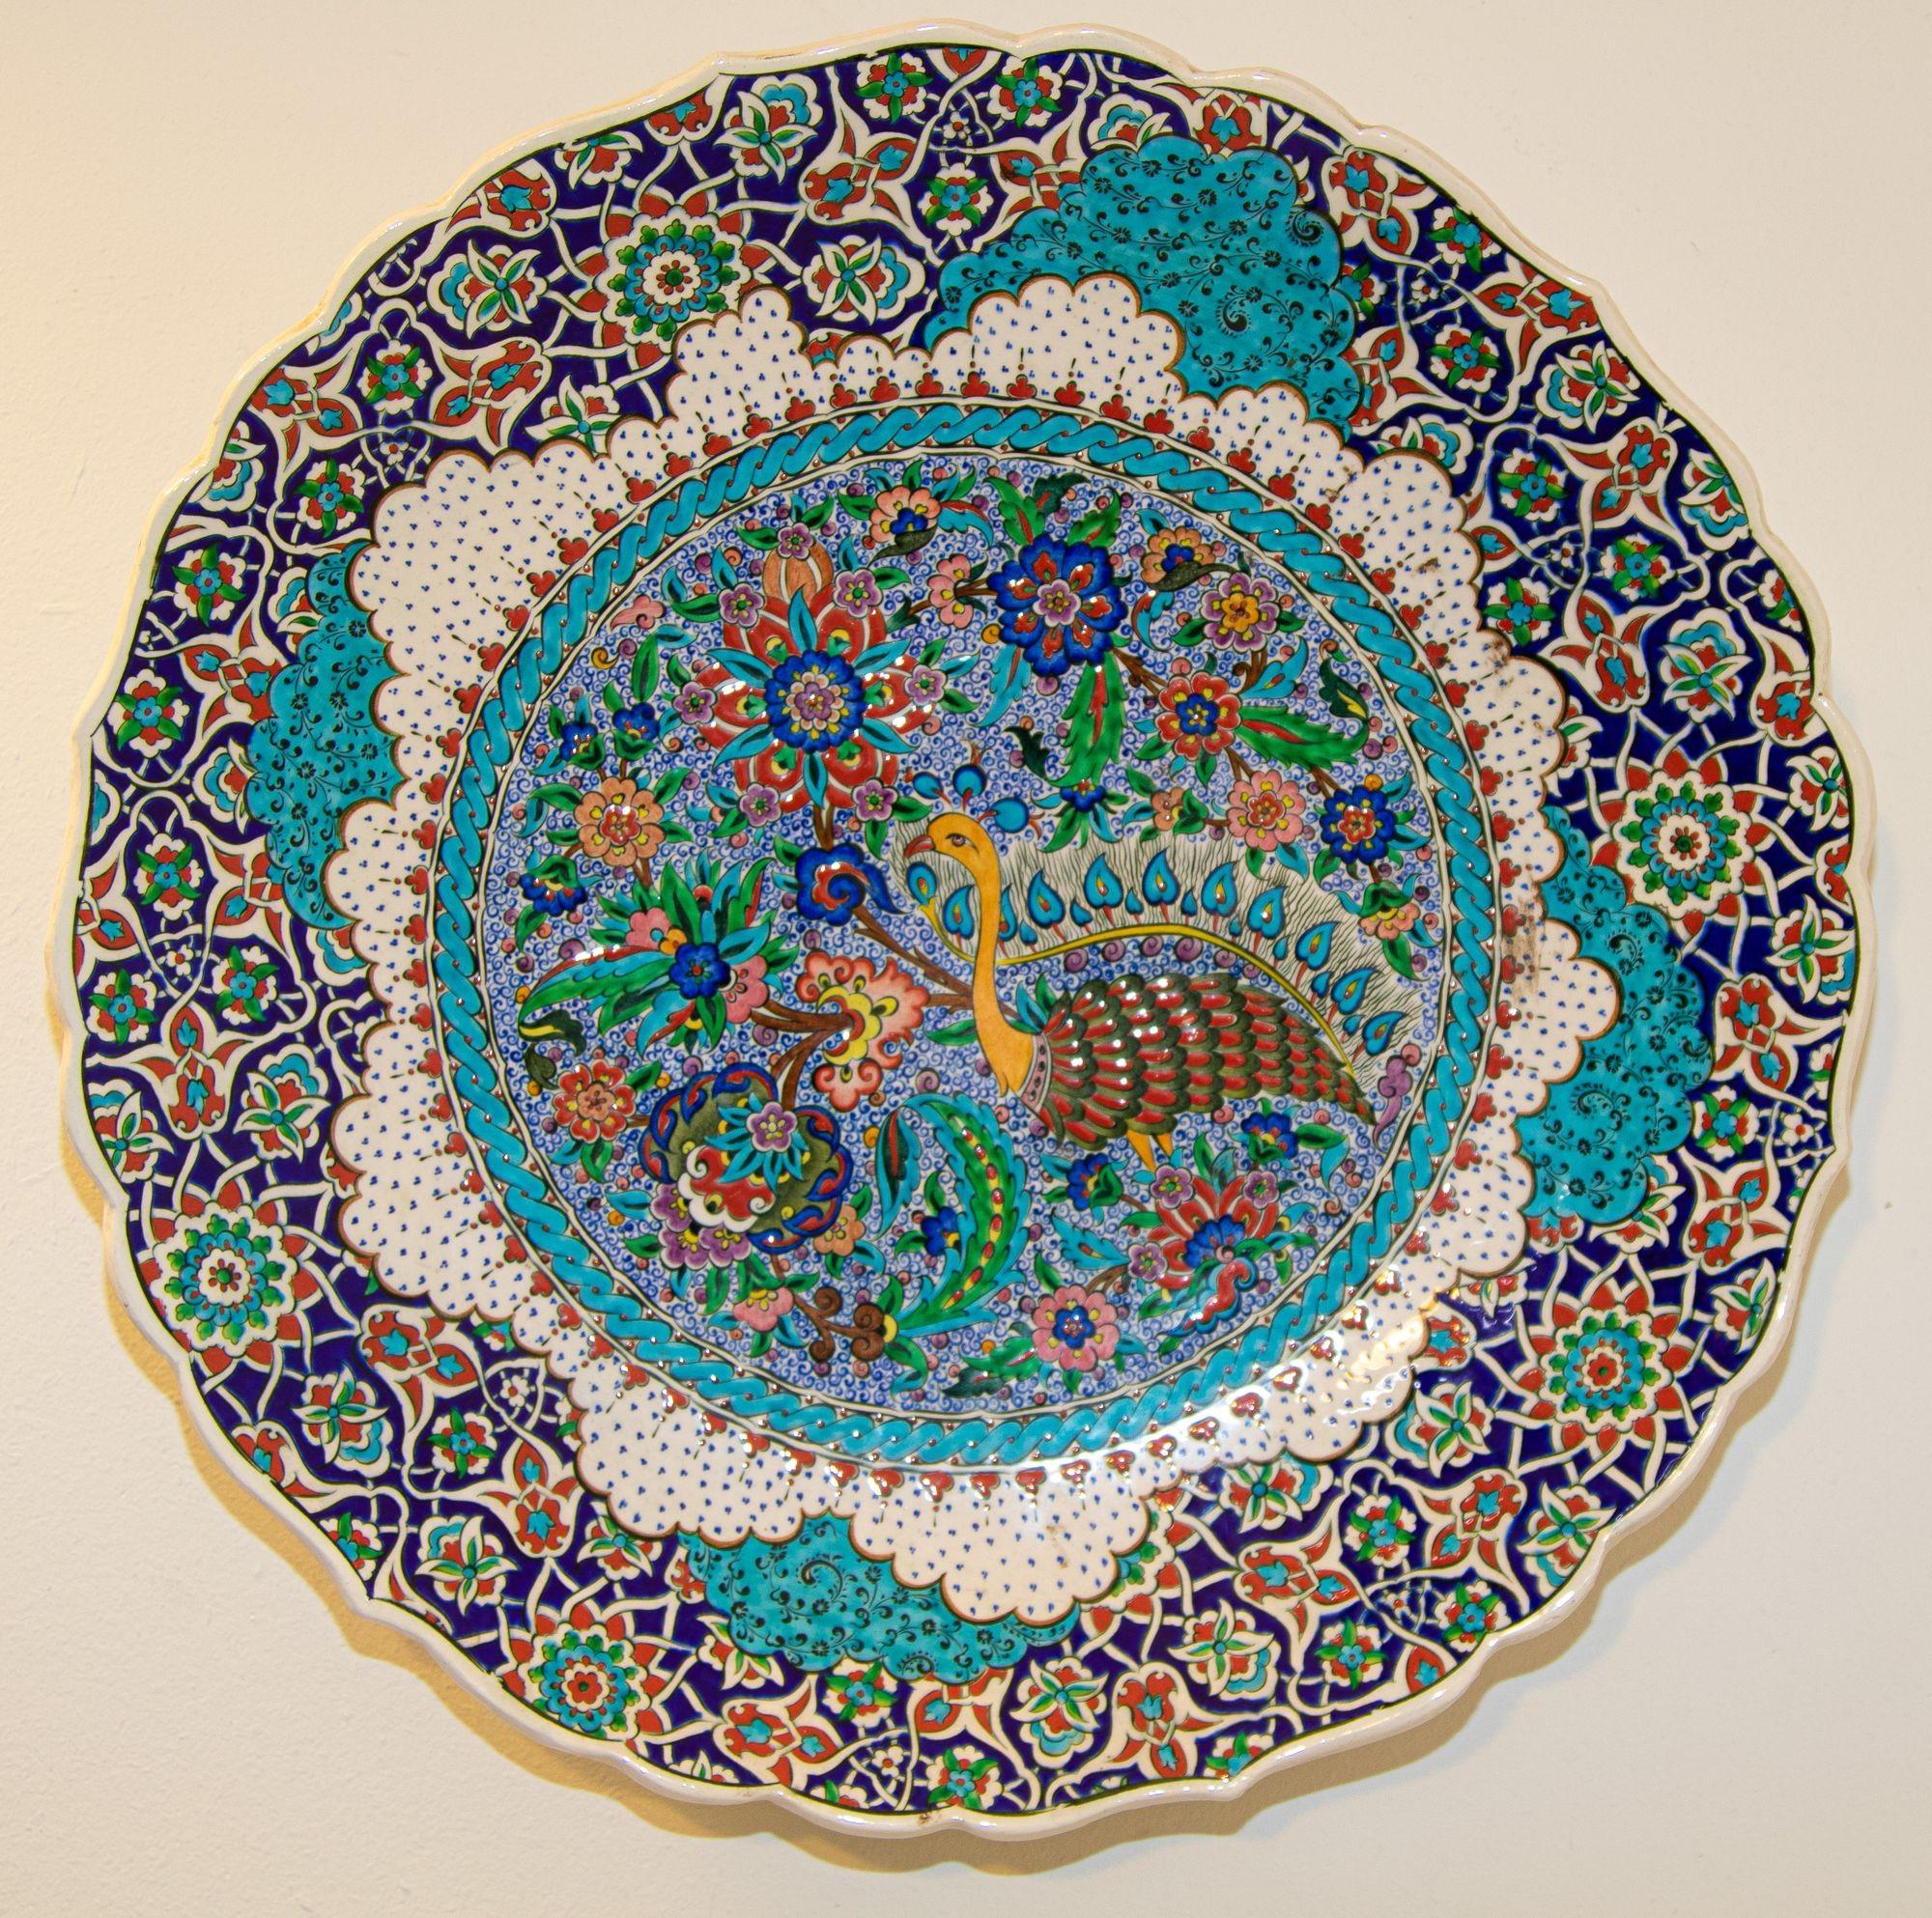 Hand Painted Decorative Plate After an Original Iznik 16th C. Ottoman Design 2